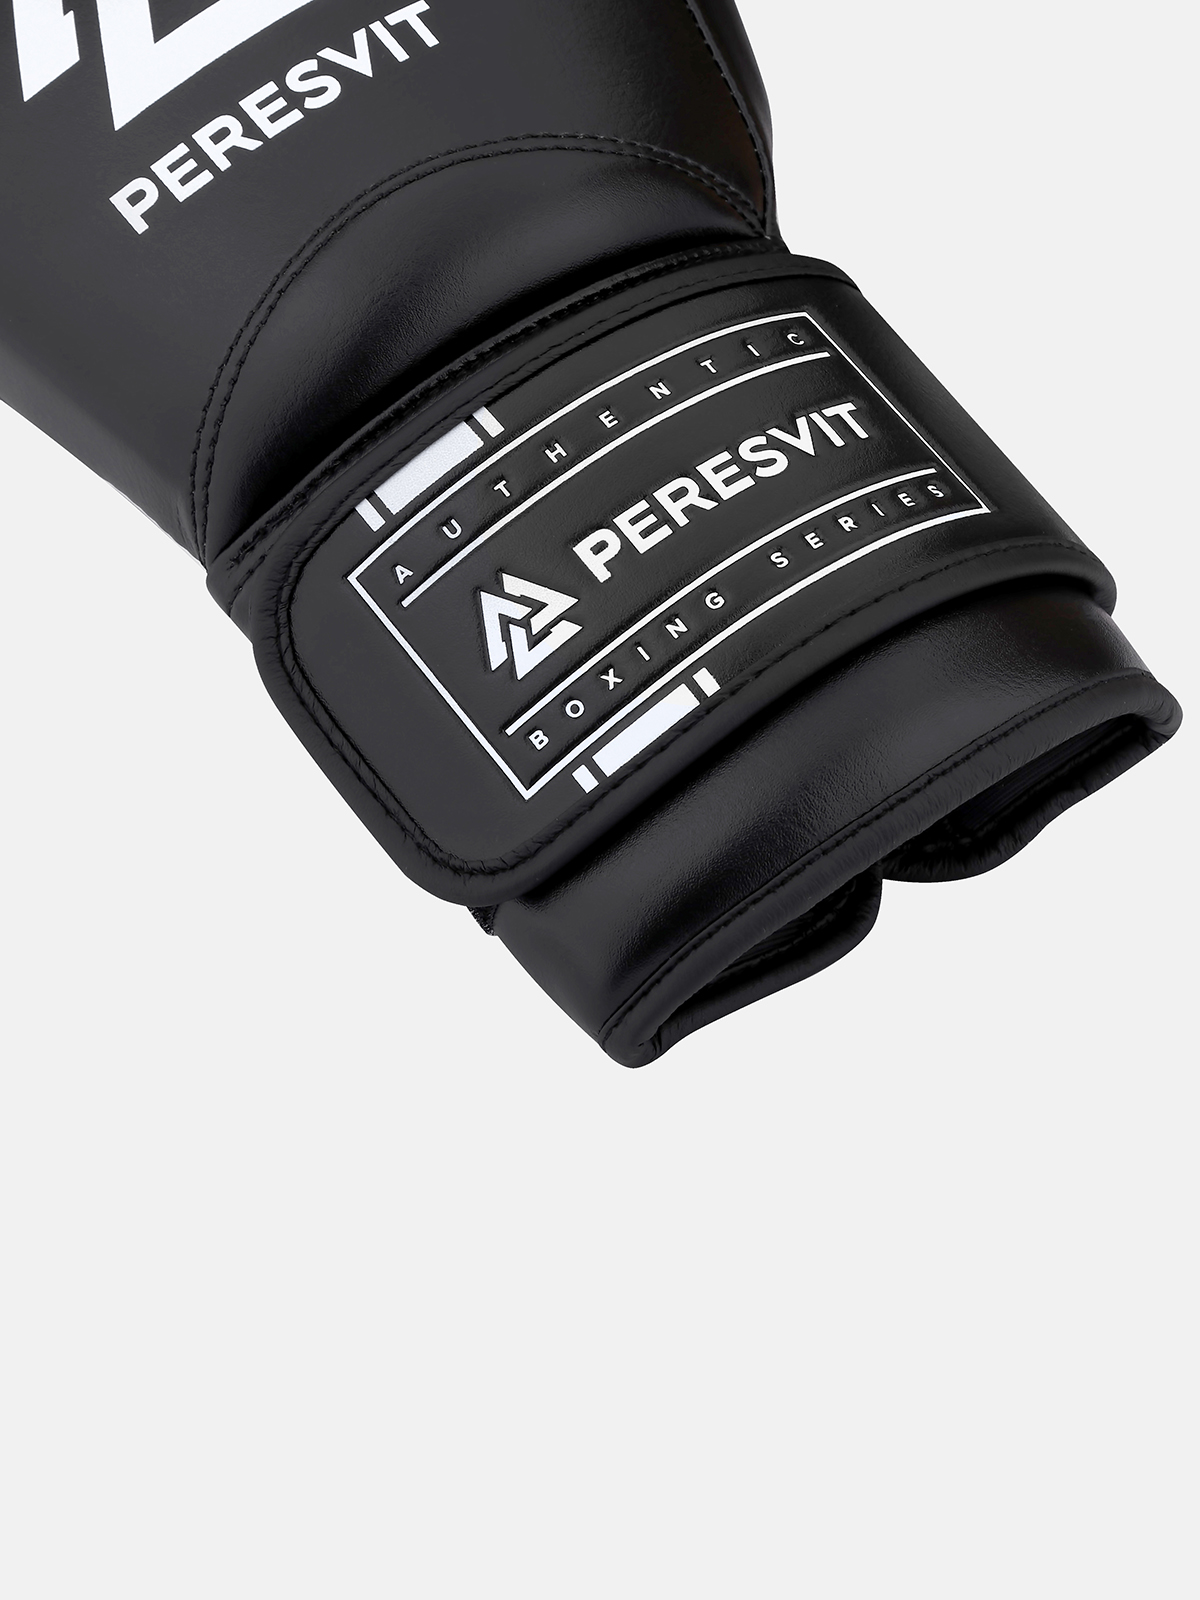 Peresvit Precision Boxing Gloves, Фото № 6